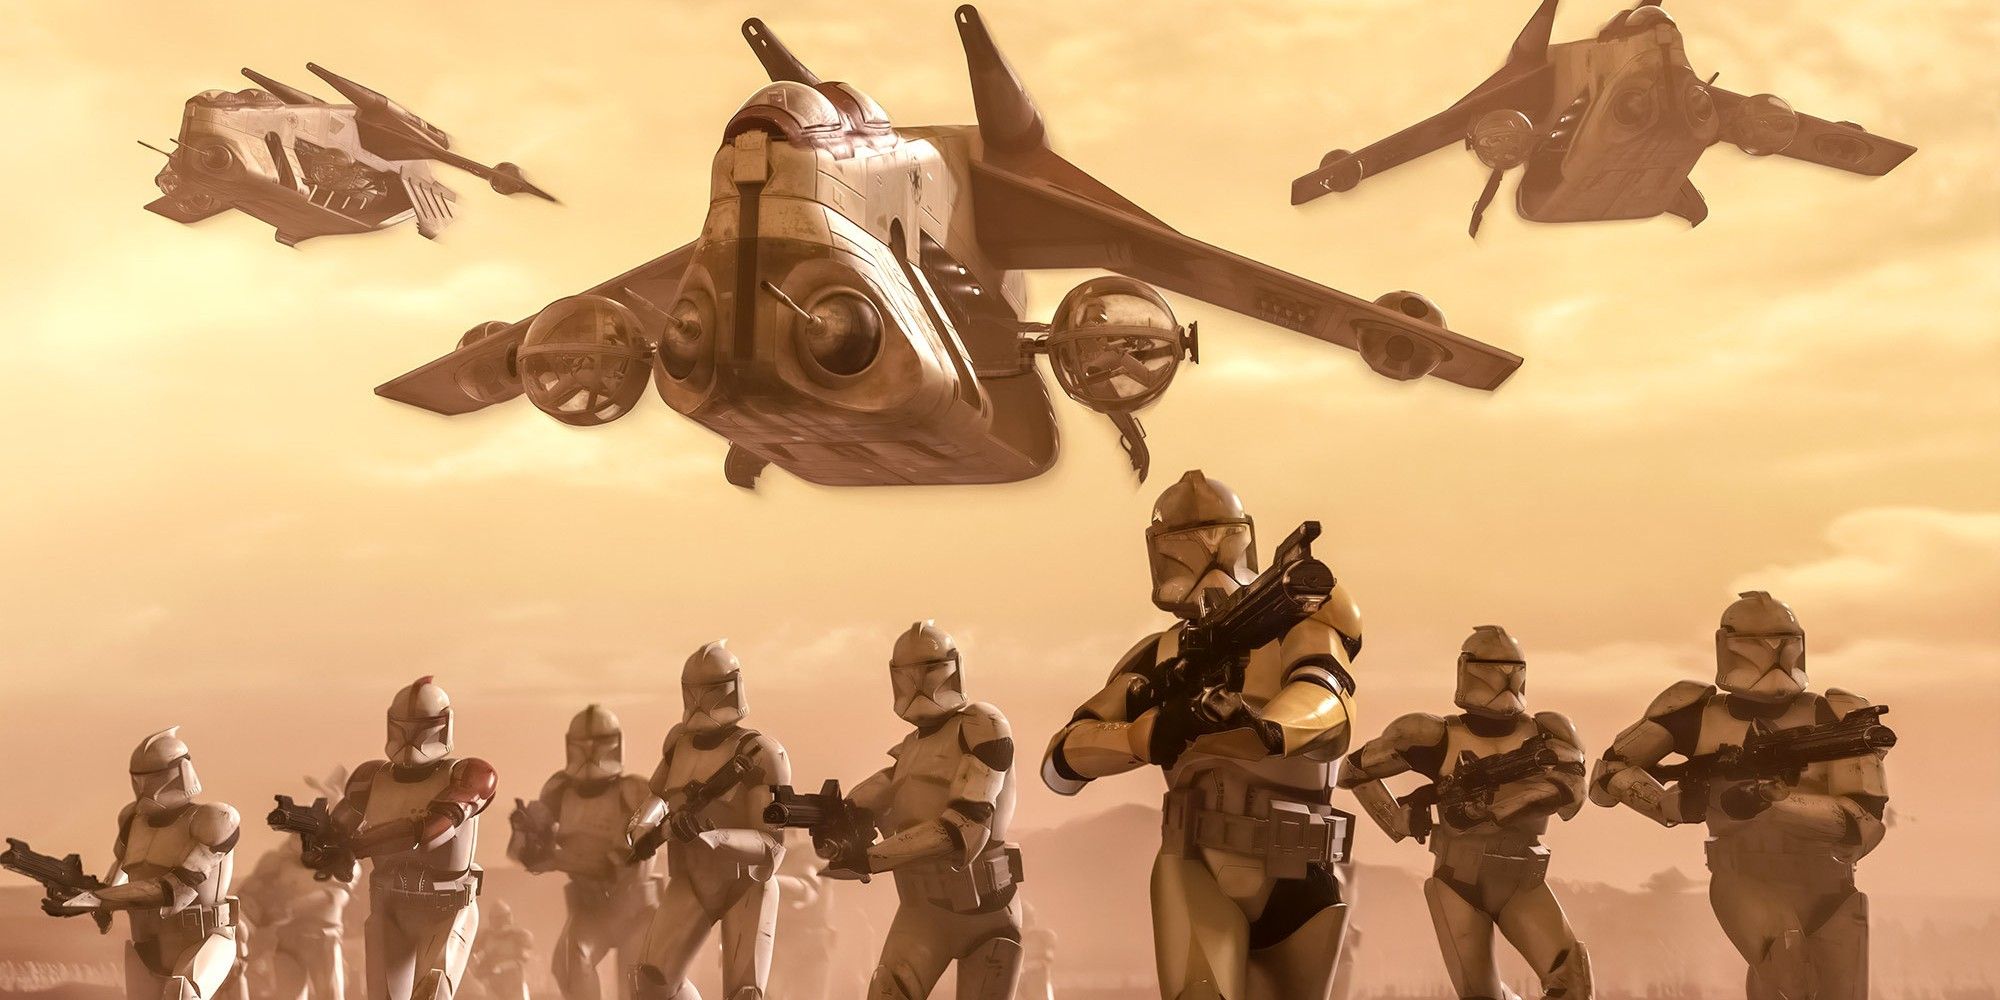 Star Wars' Clone Troopers head into battle on Geonosis